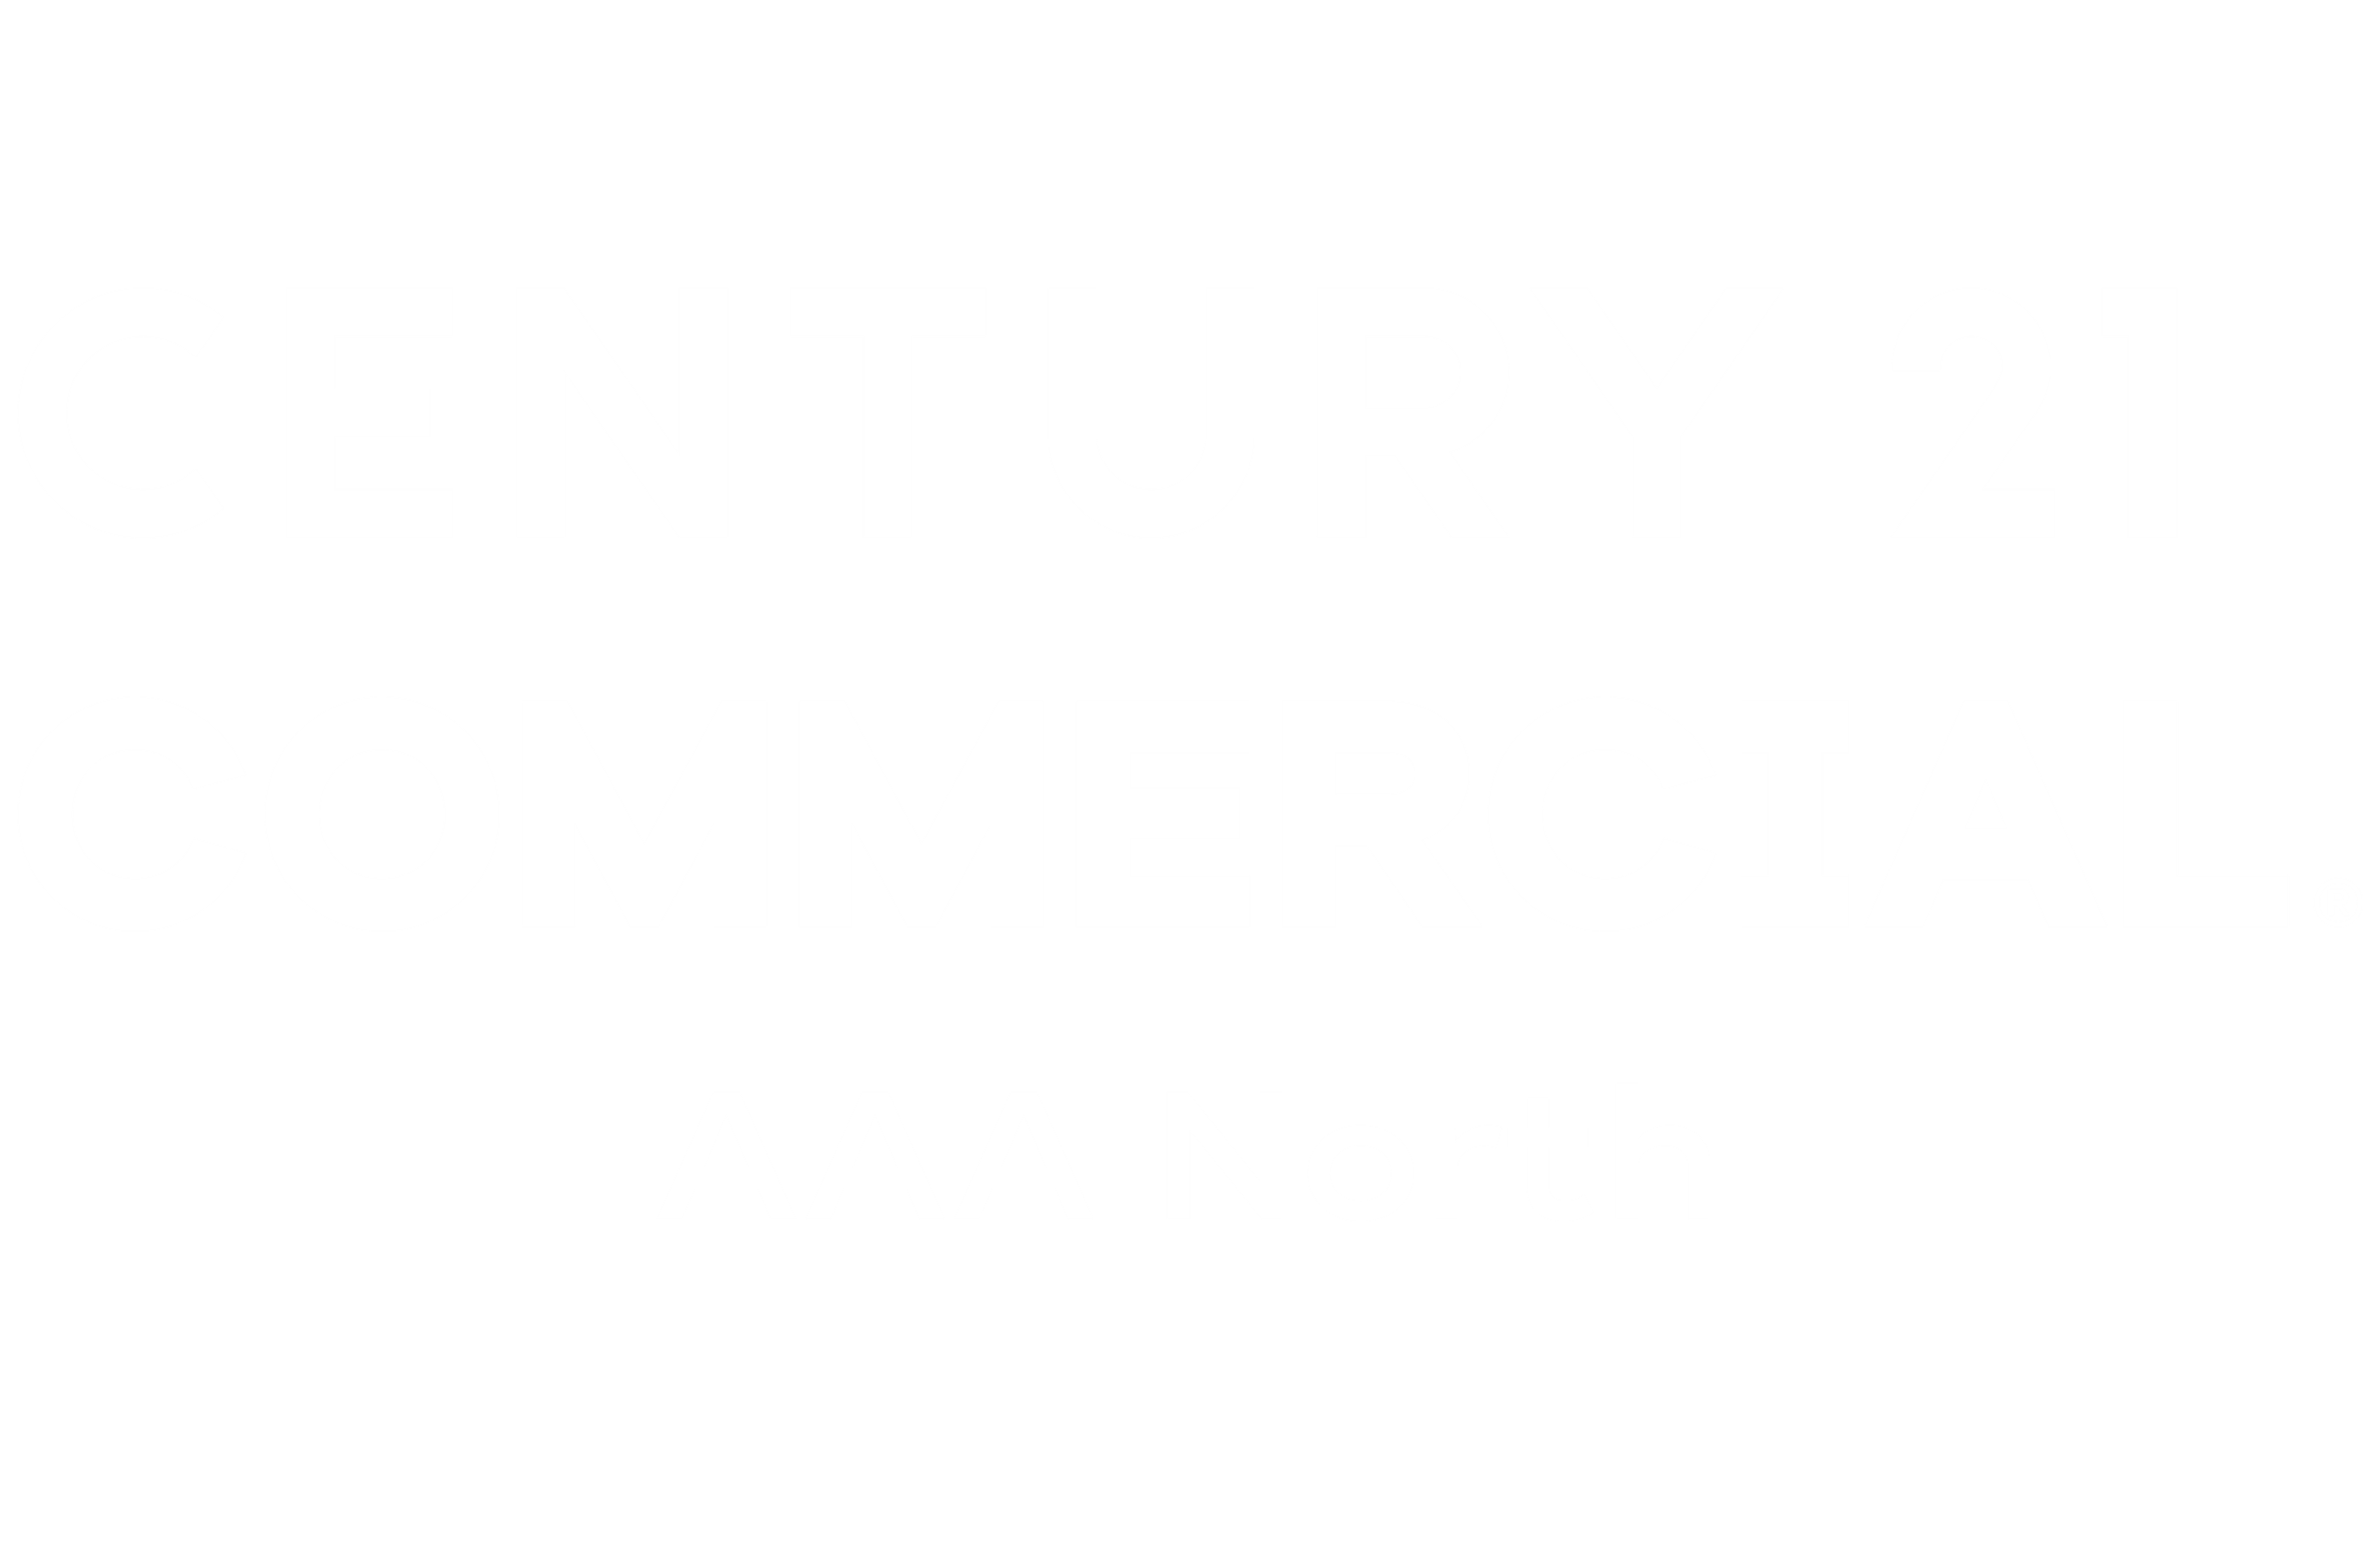 CommercialCenter (1)